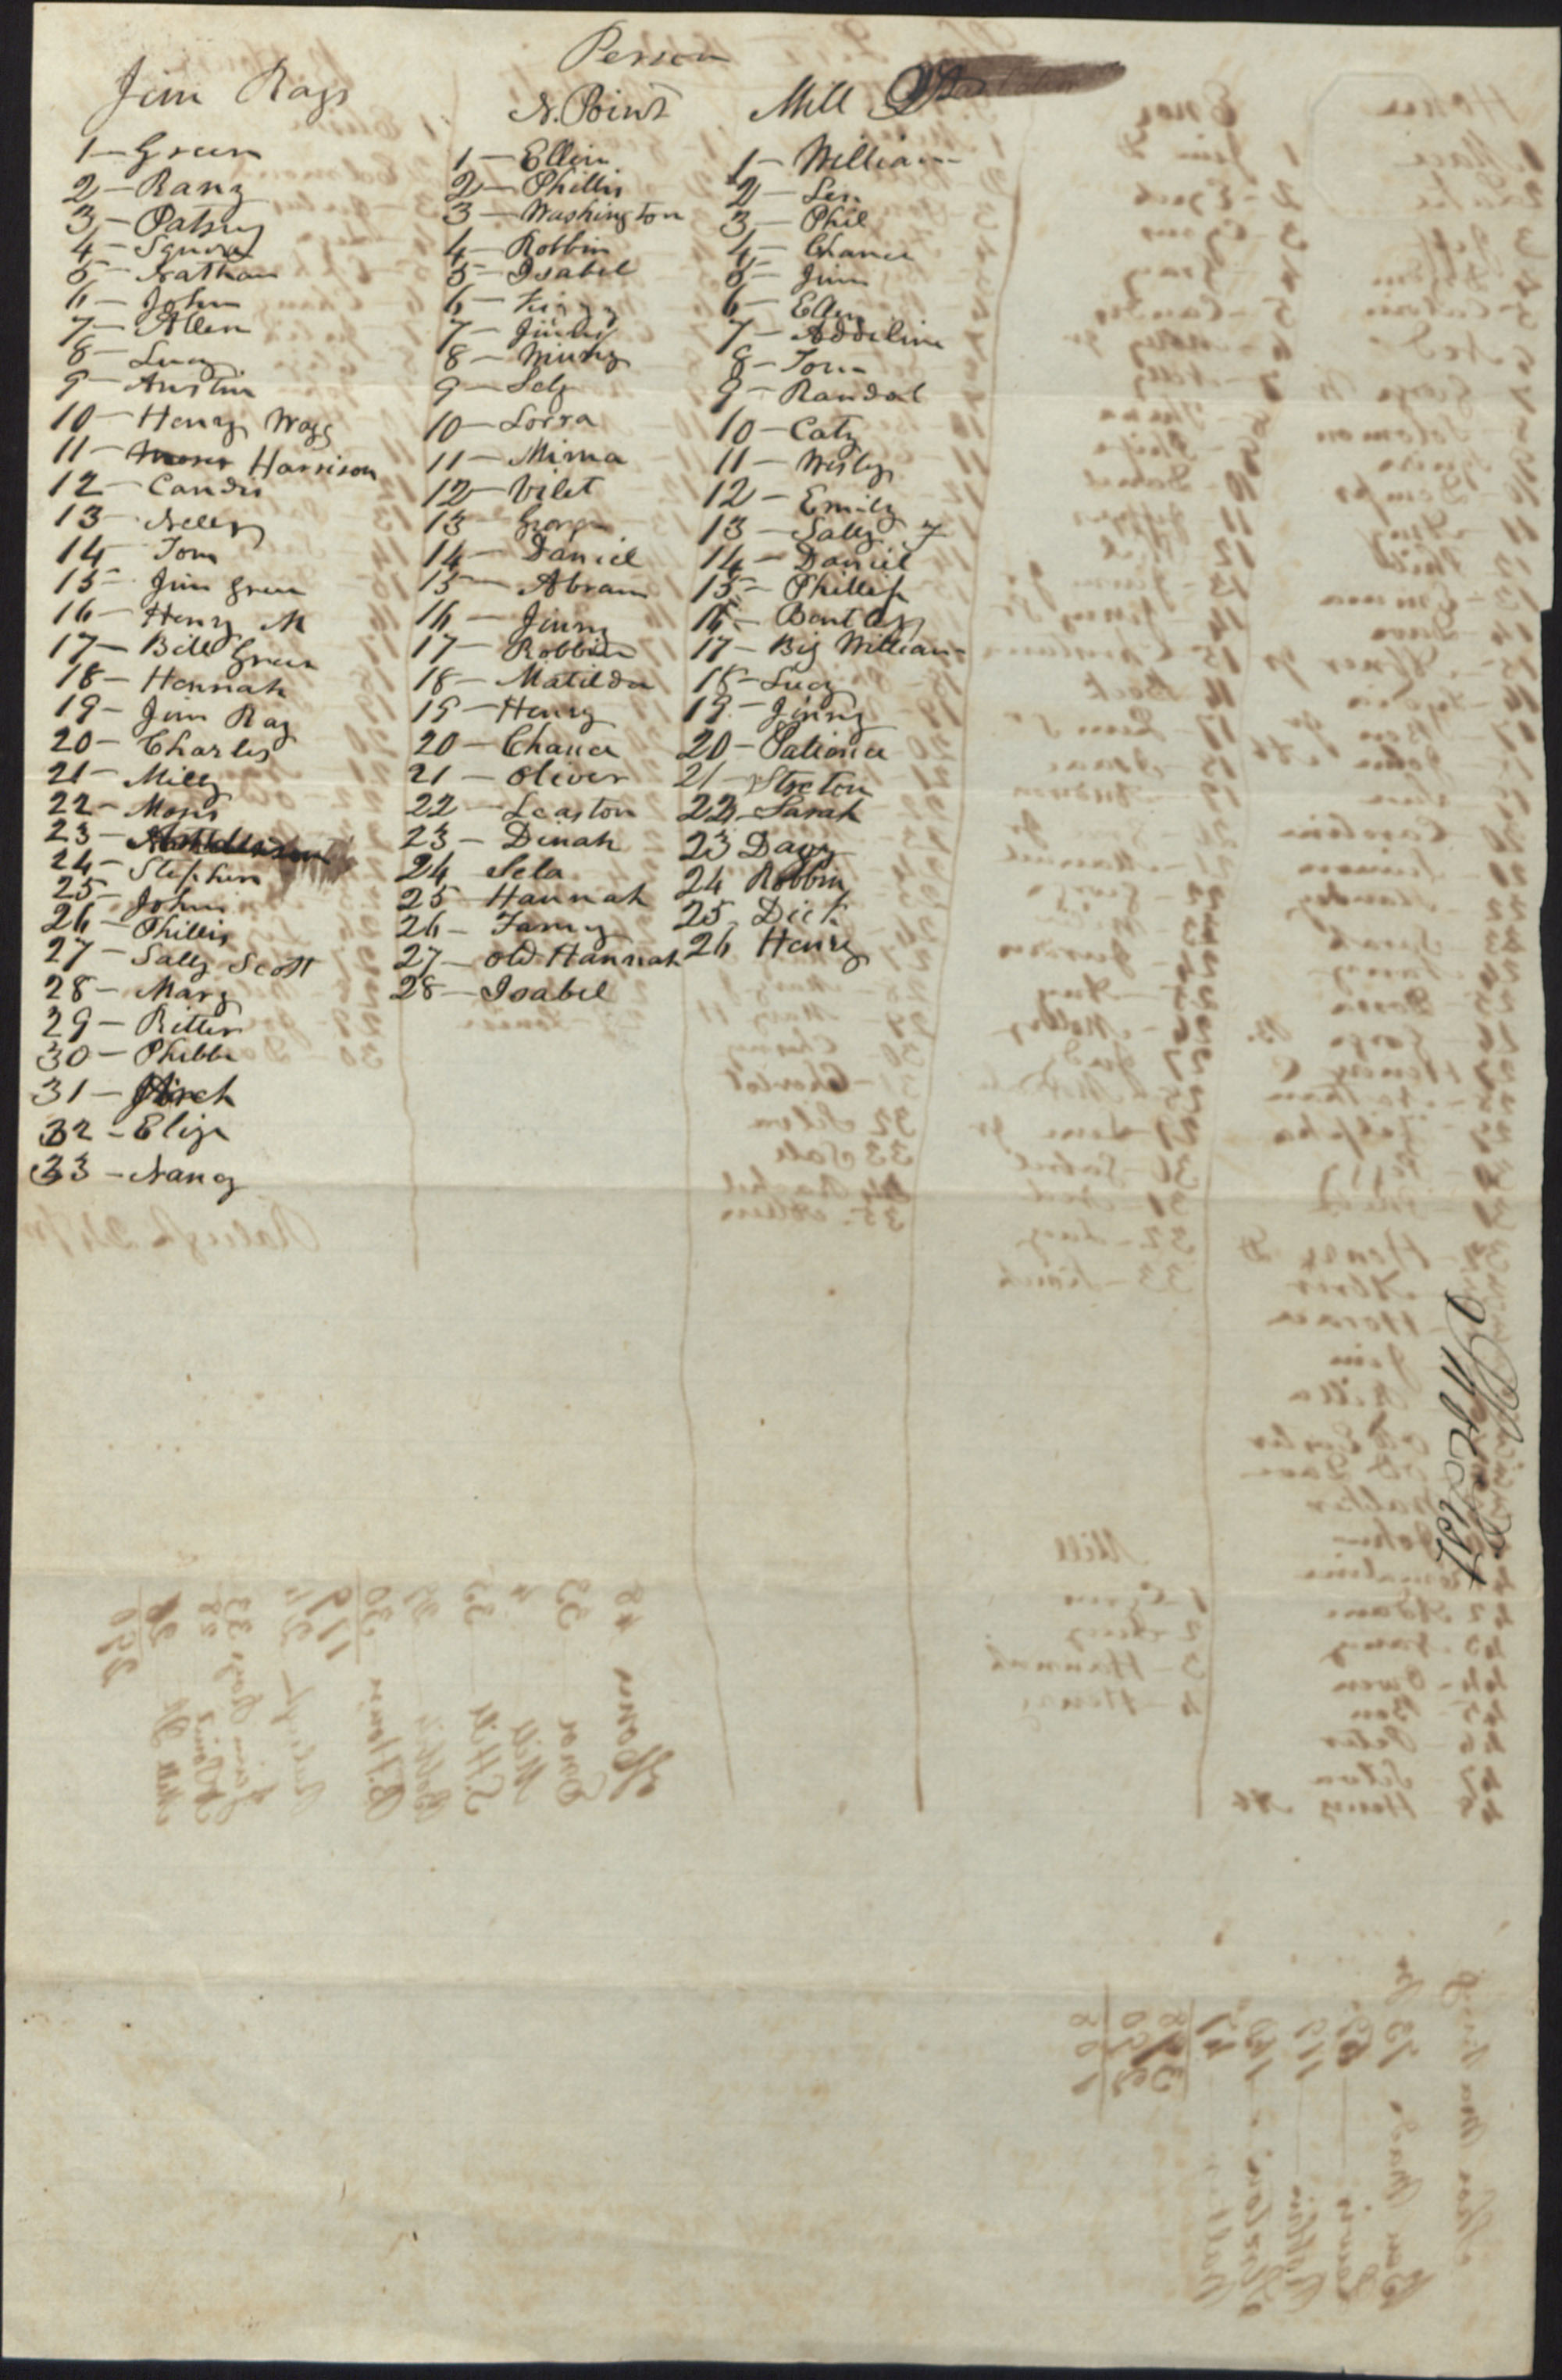 List of slaves on Cameron family plantation